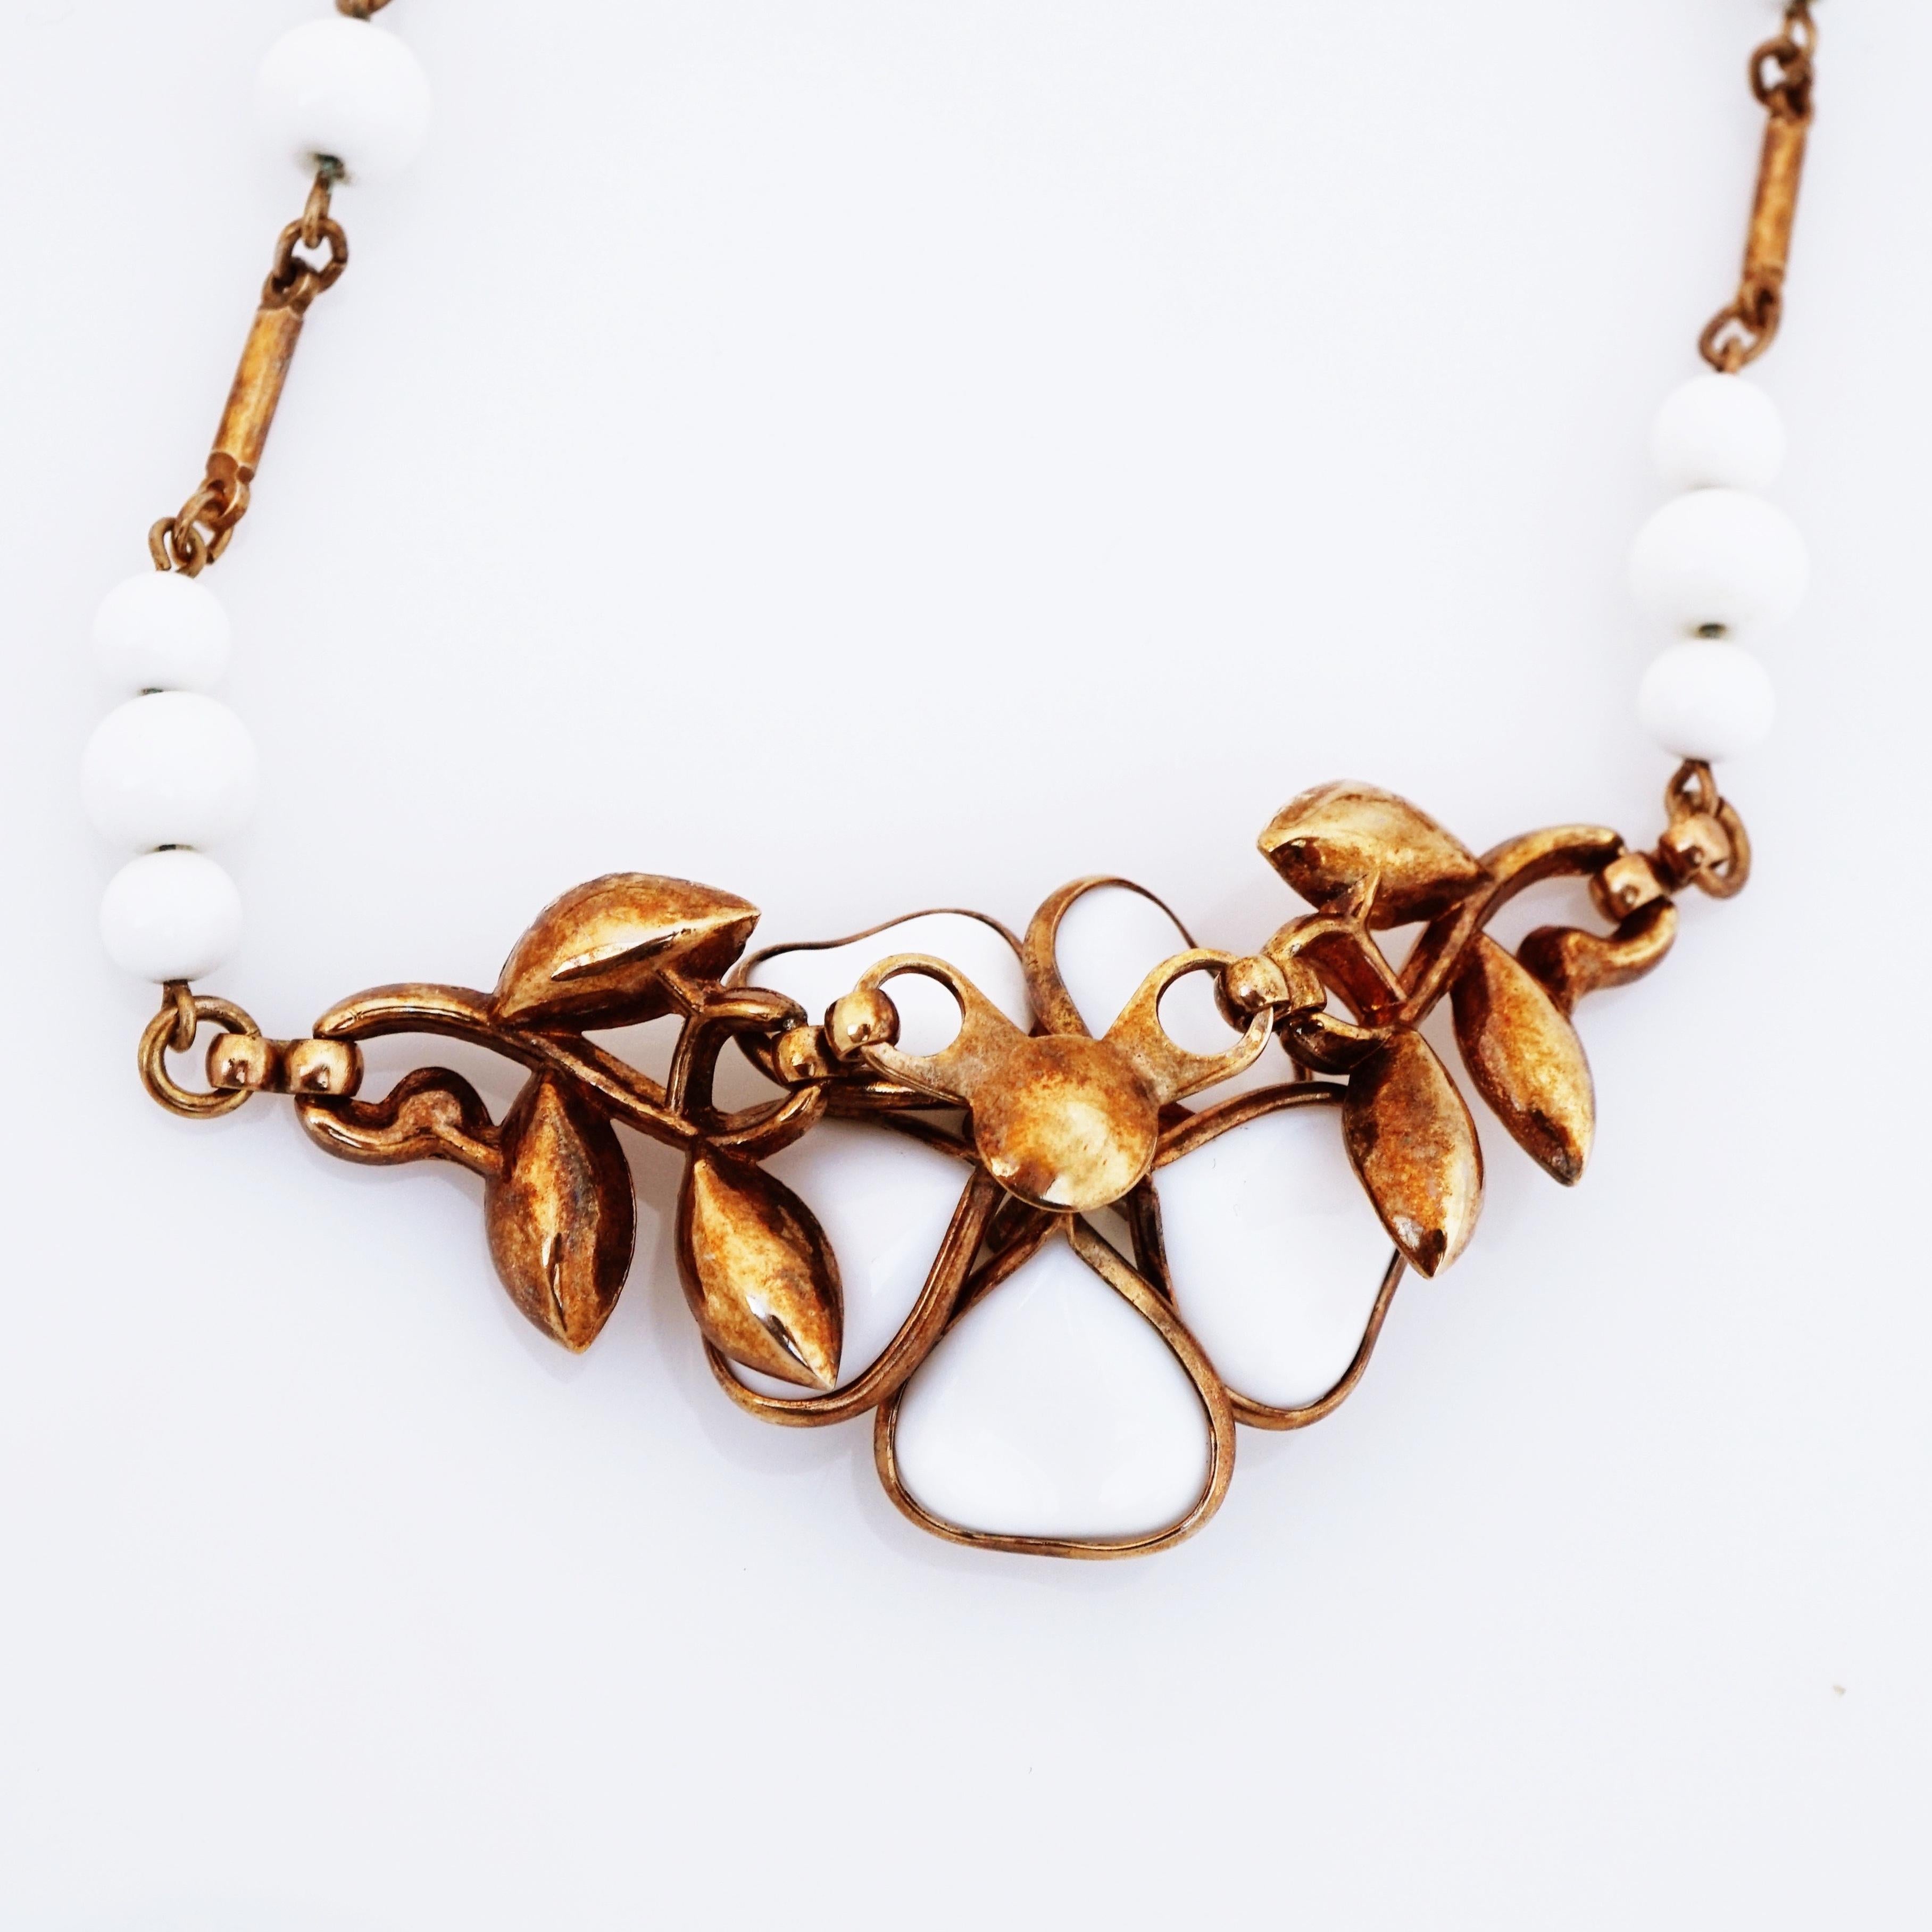 Modern Poured Milk Glass Magnolia Flower Choker Necklace By Crown Trifari, 1950s